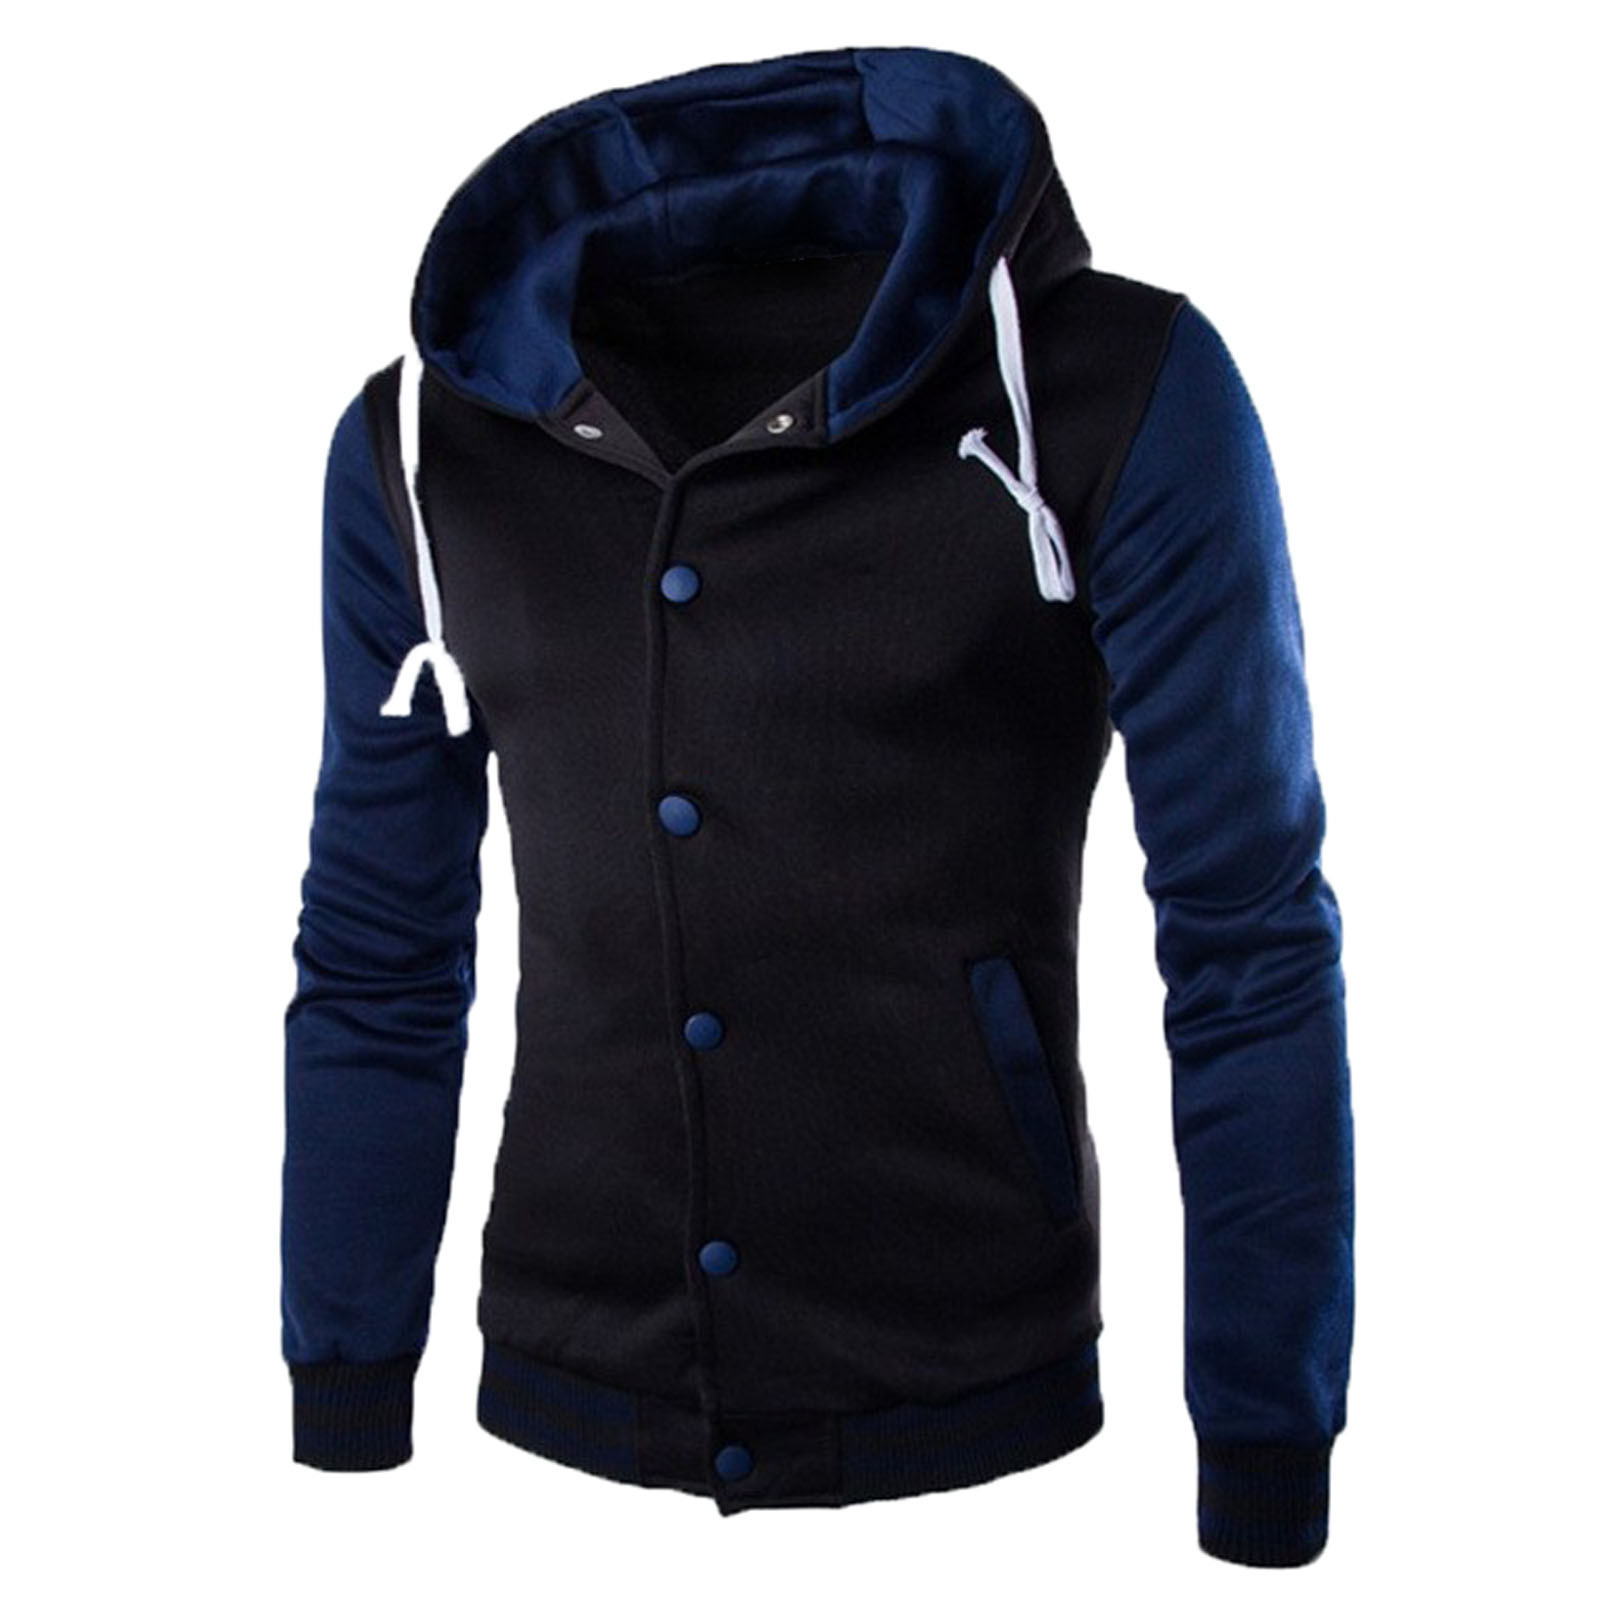 tklpehg Mens Coat Long Sleeve Coat Trendy Fashion Casual Jacket Outdoor Single-breasted Jacket Tooling Baseball Uniform Jacket Dark Blue XXXXXL - image 1 of 3